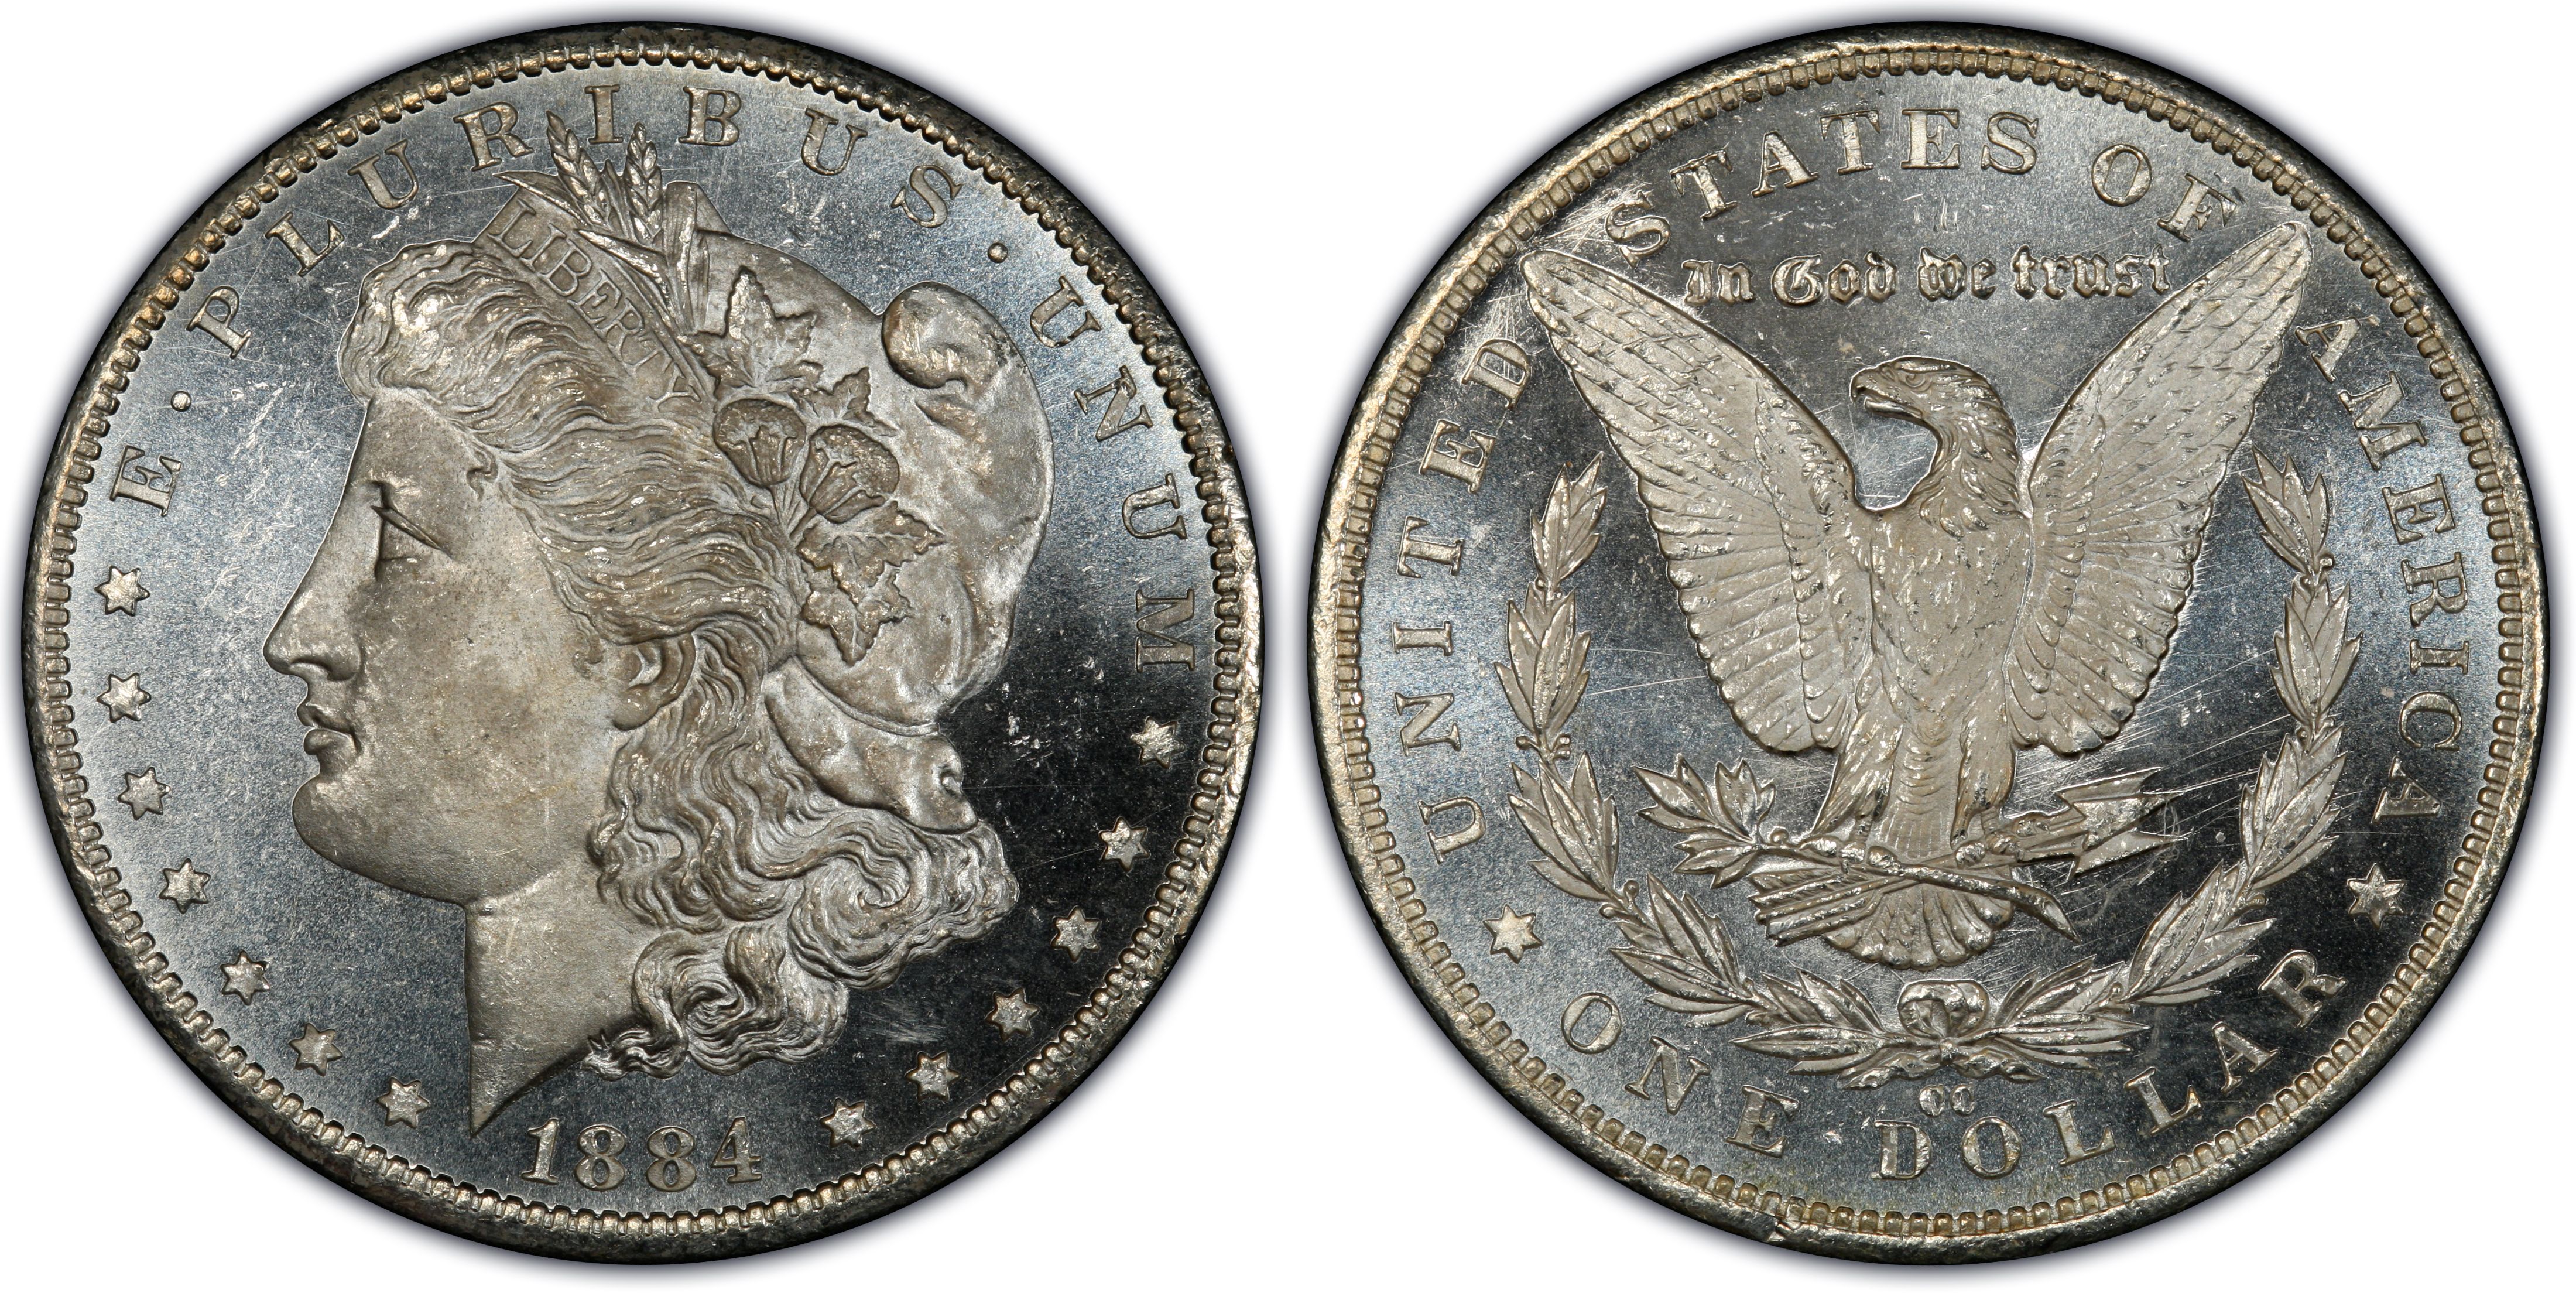 1884-CC $1, DMPL (Regular Strike) Morgan Dollar - PCGS CoinFacts